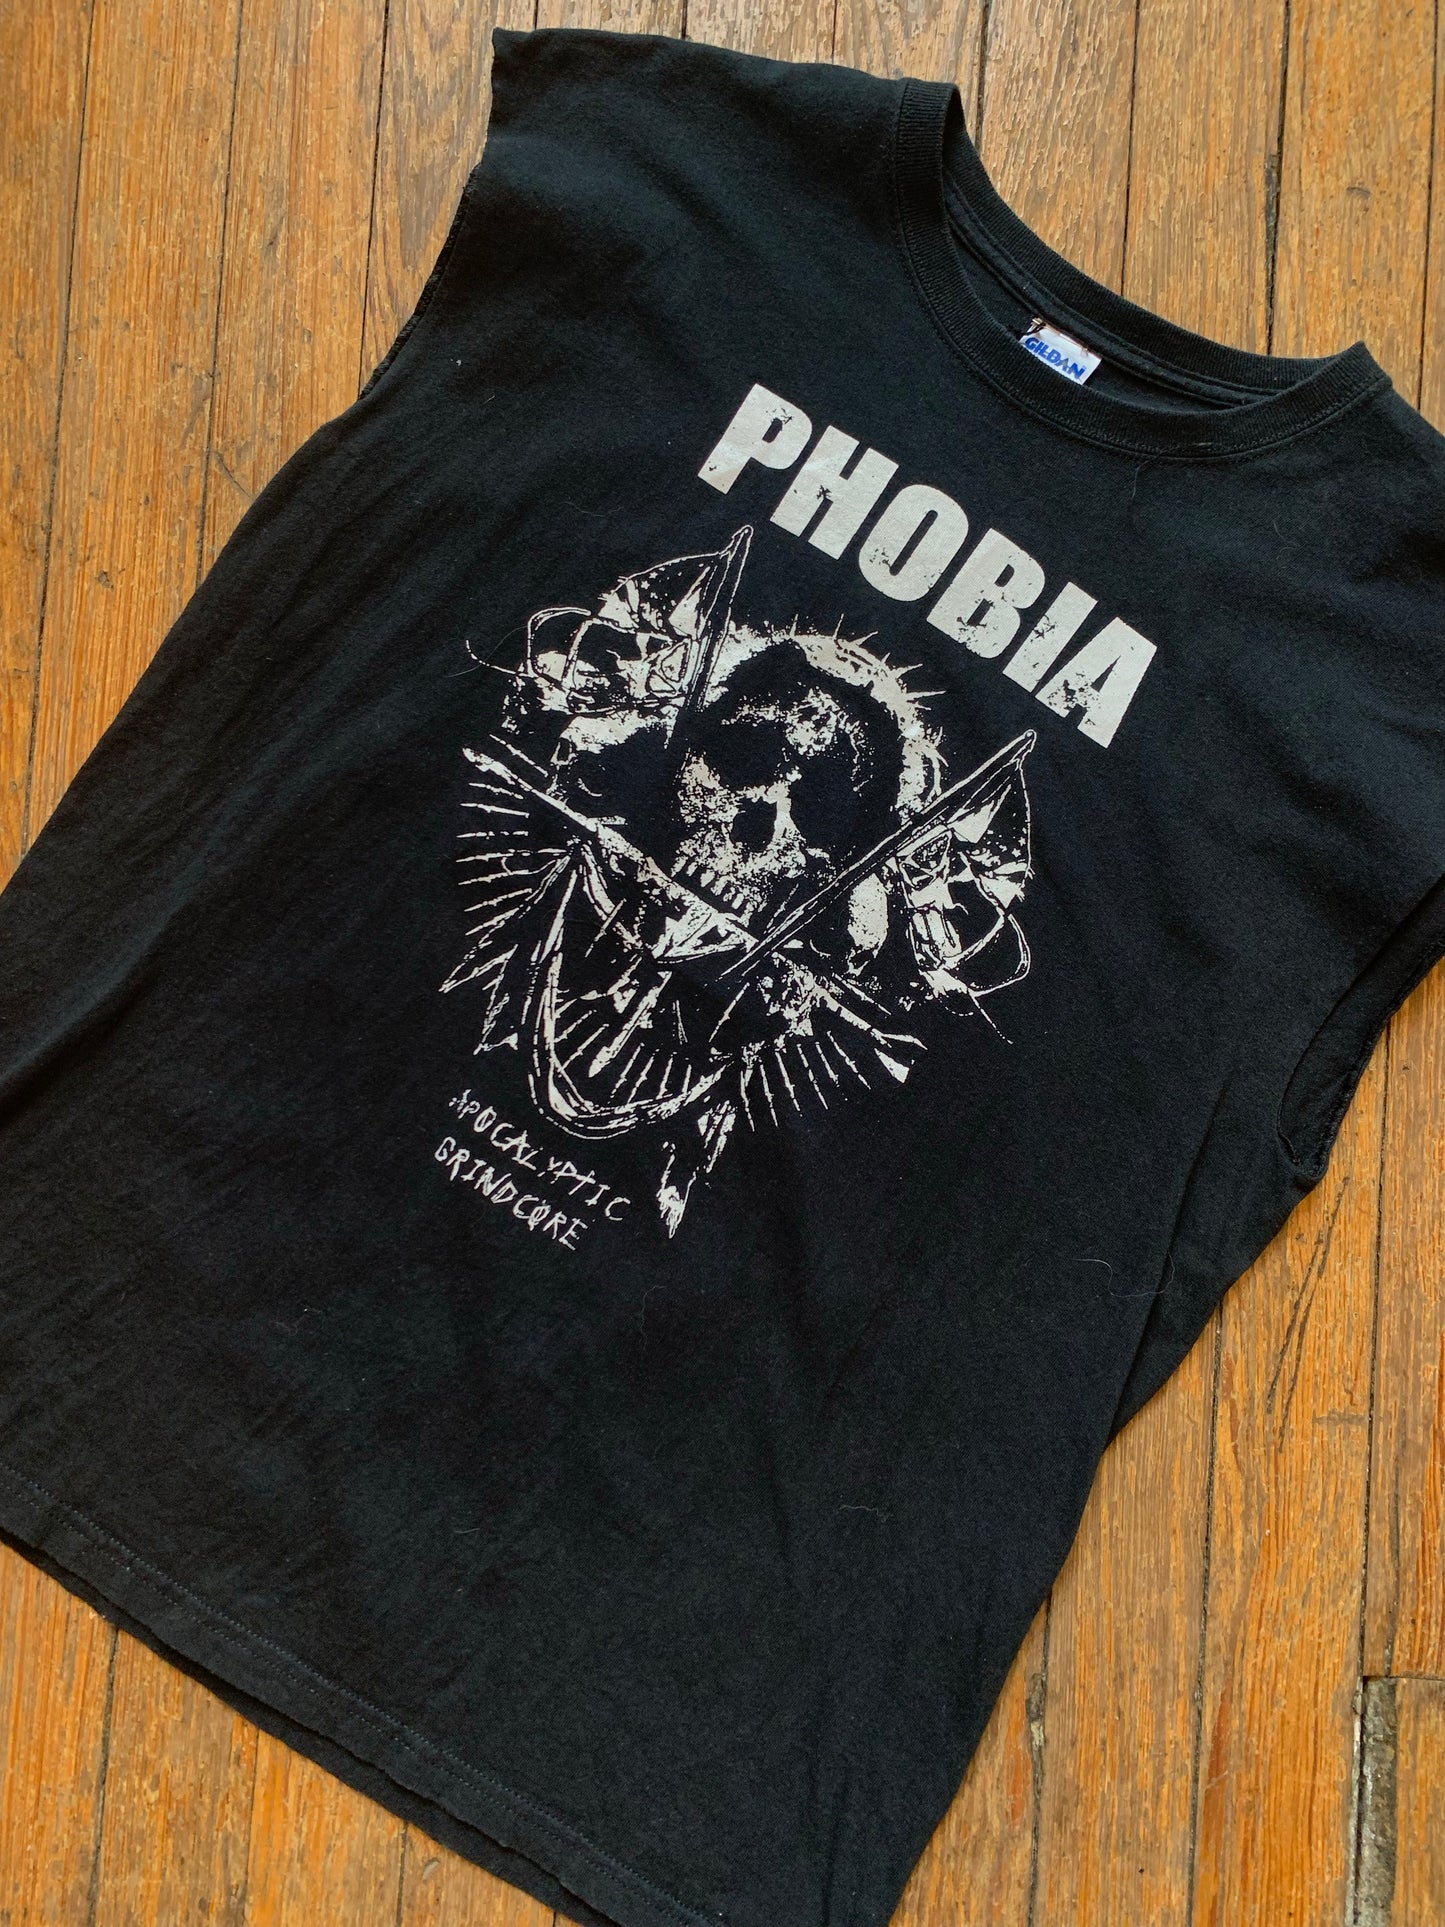 Phobia “Apocalyptic Grindcore” T-Shirt